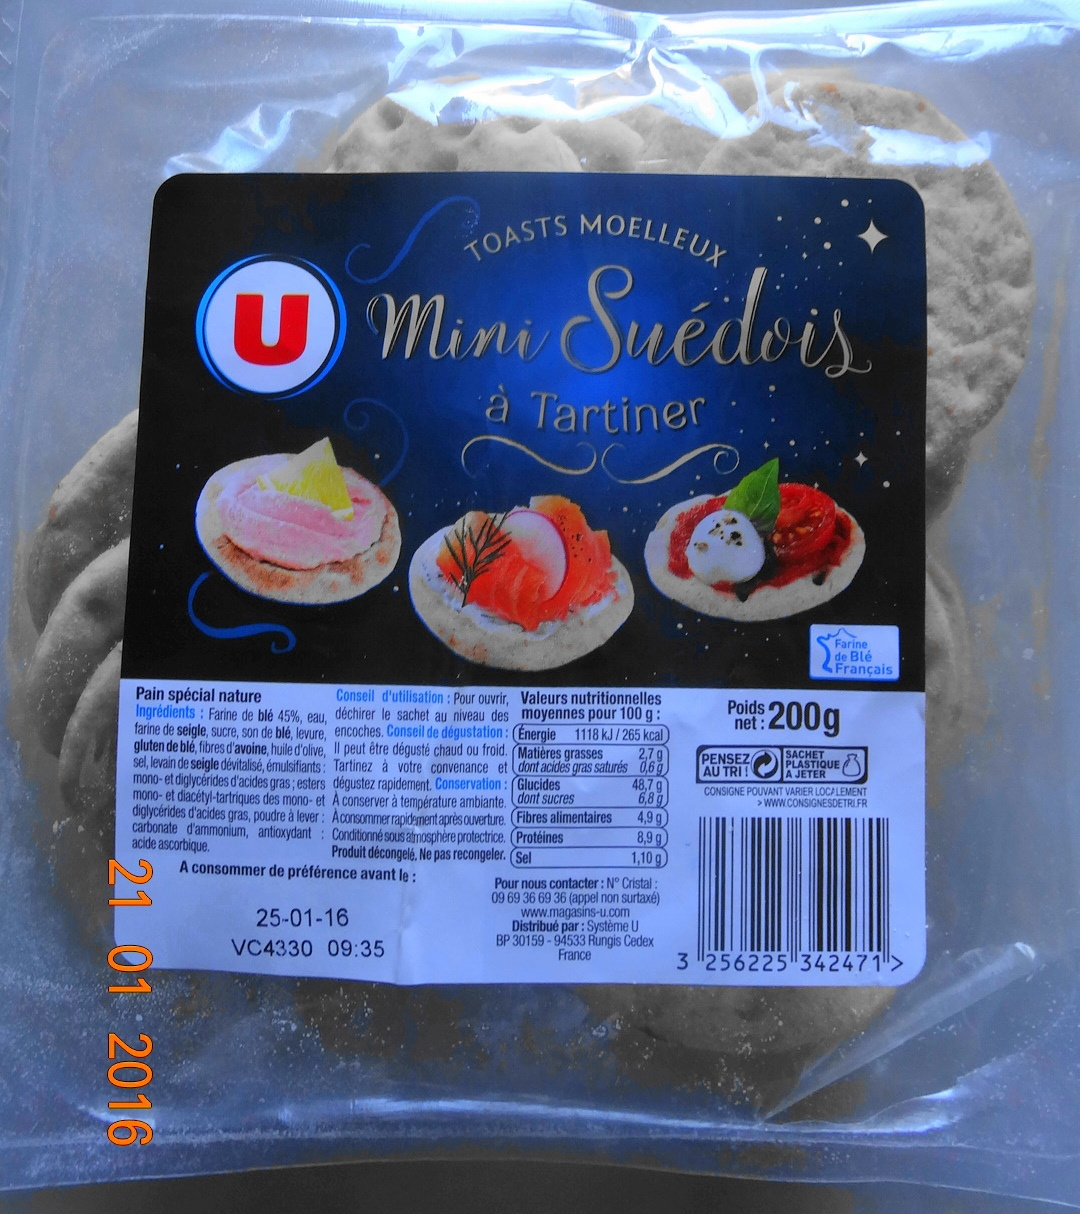 Mini Suédois, toast moelleux à tartiner - Product - fr